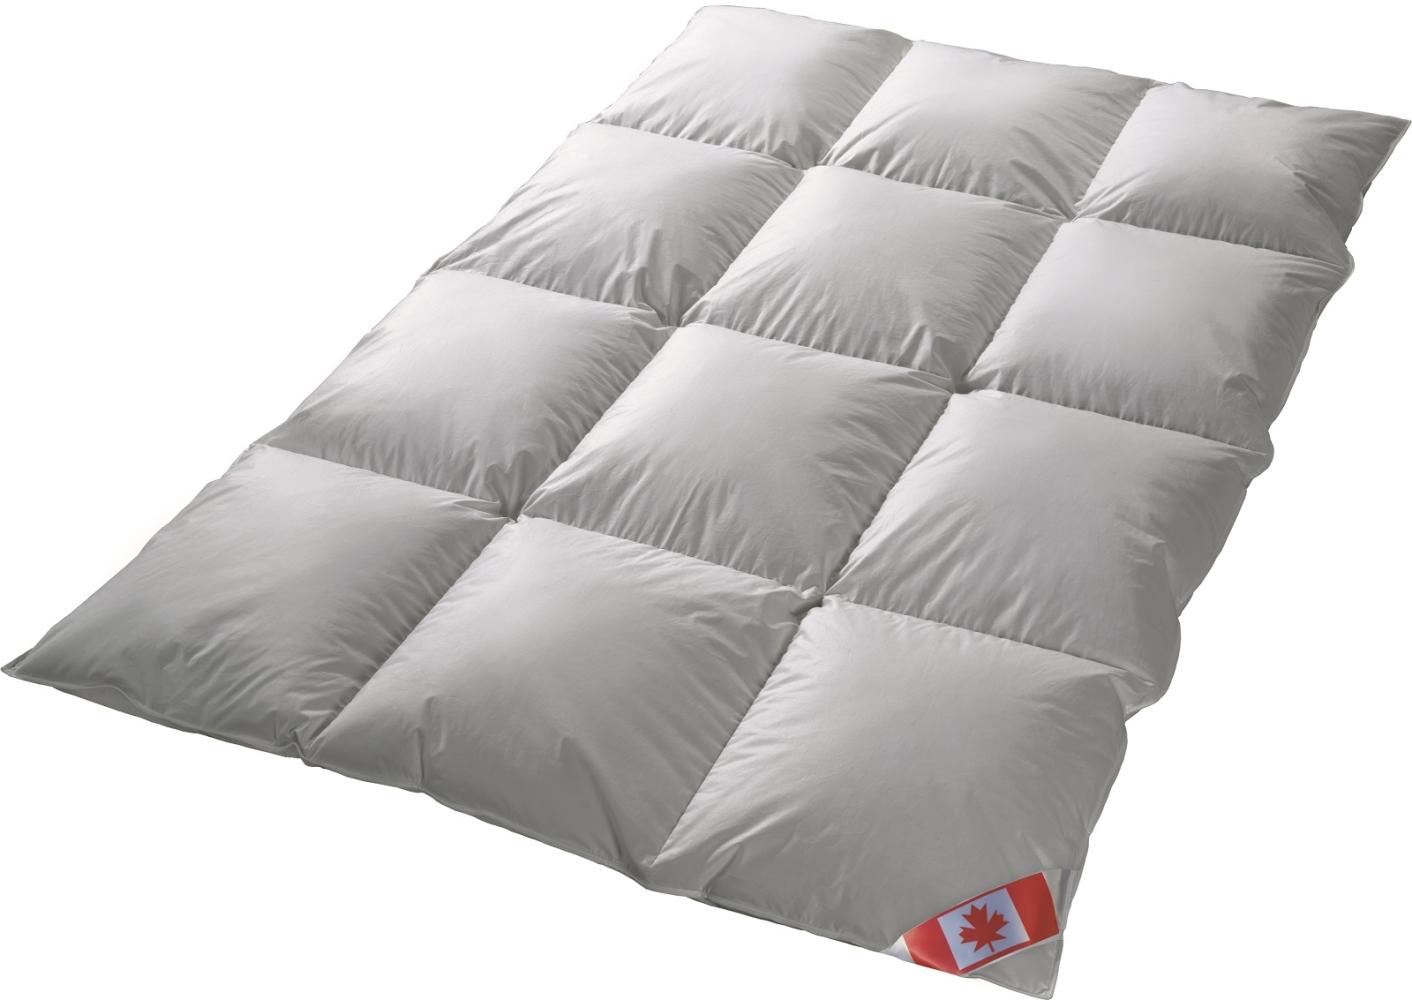 Canada extra warme Winter Decke Kassetten Hochsteg 100% Daune 155x220 cm C5 Bild 1